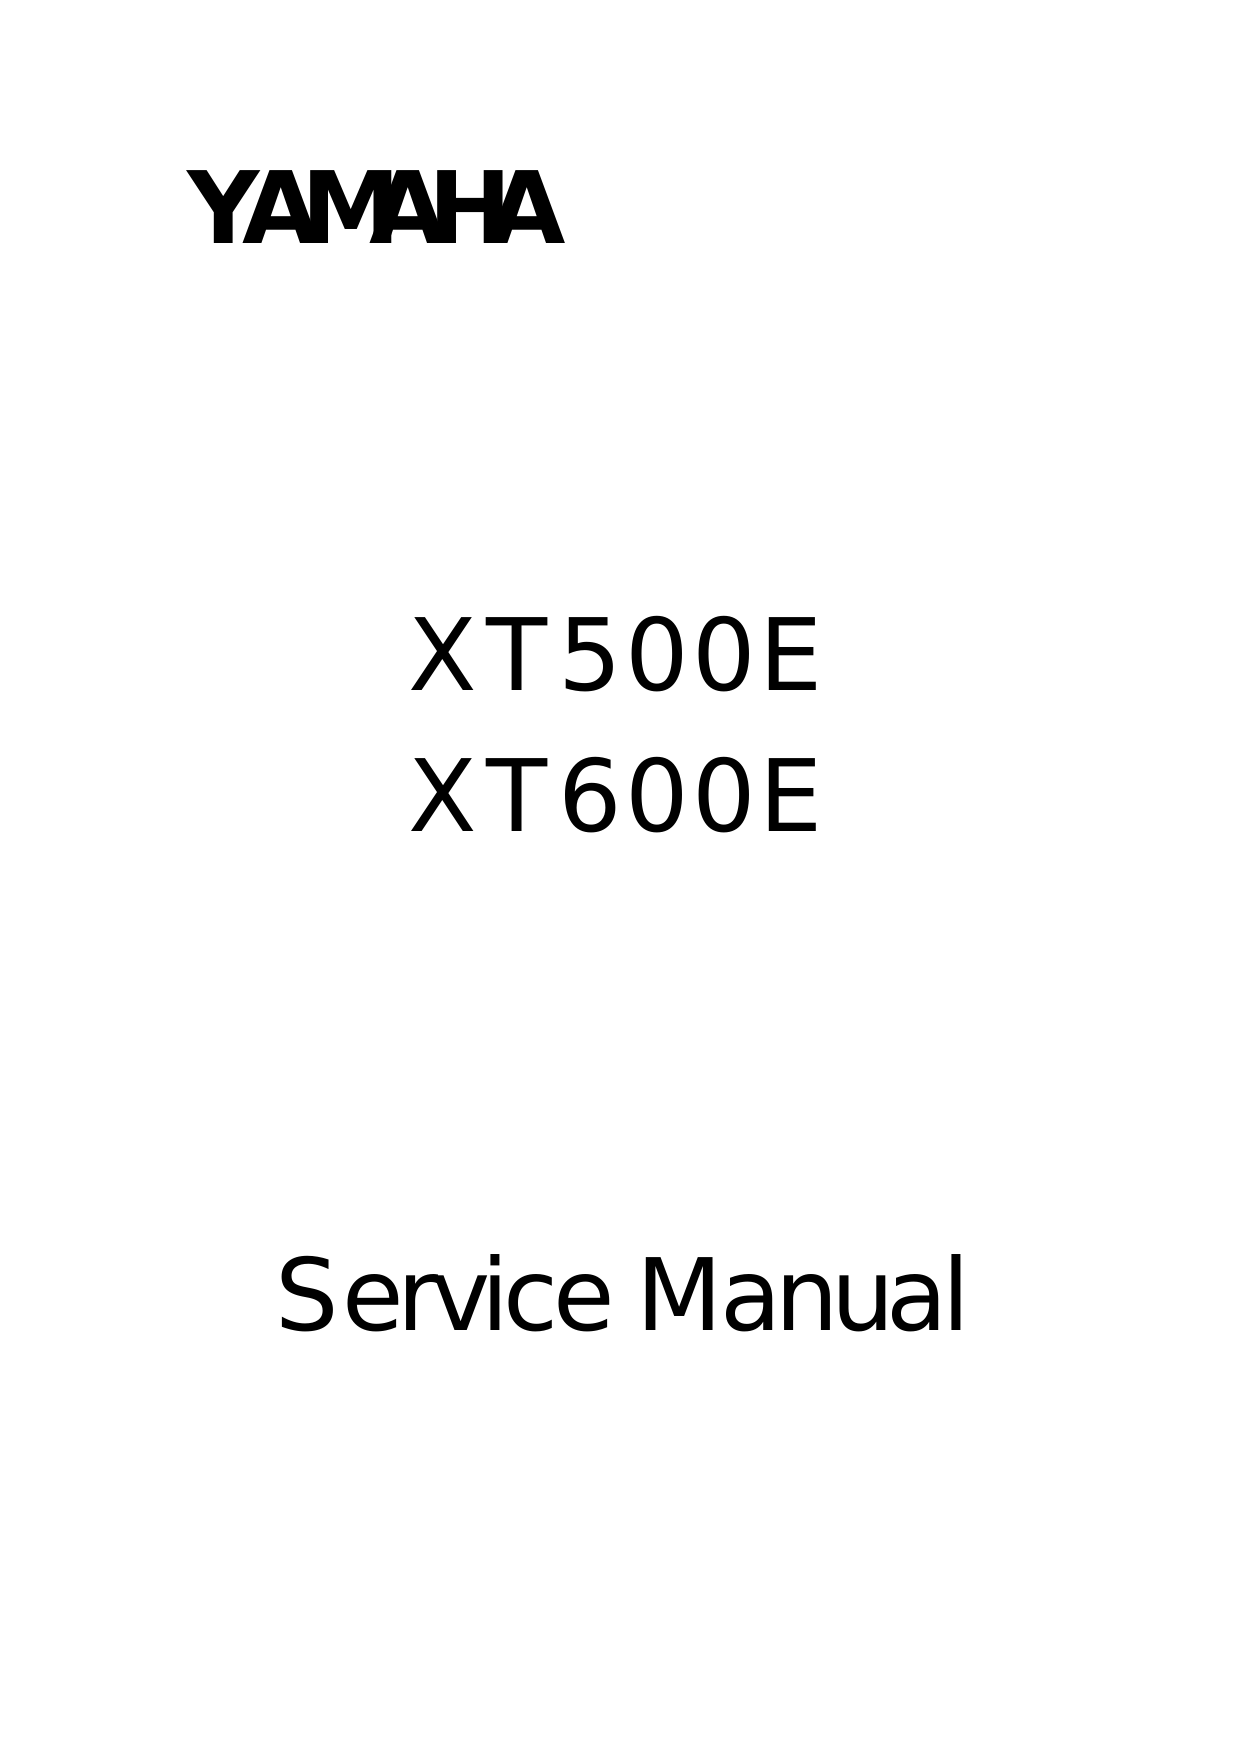 Yamaha XT600E, XT500E service manual Preview image 6